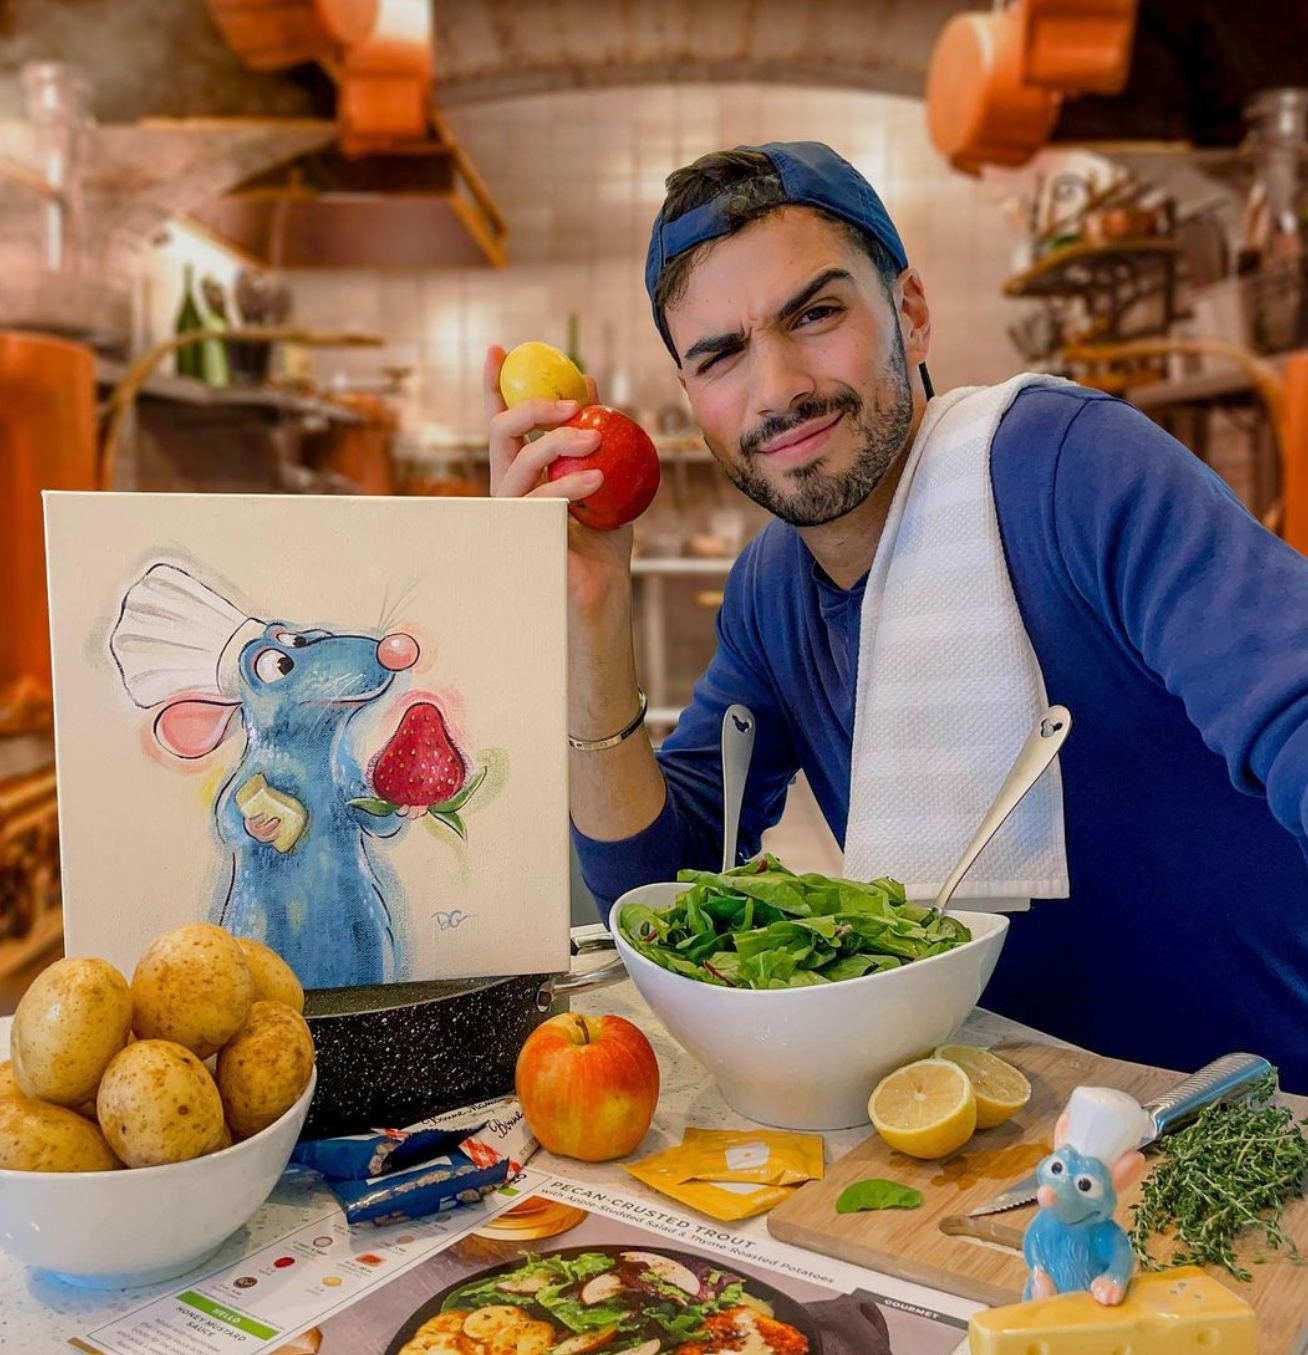 Dom Corona on Becoming a Disney Fine Artist 